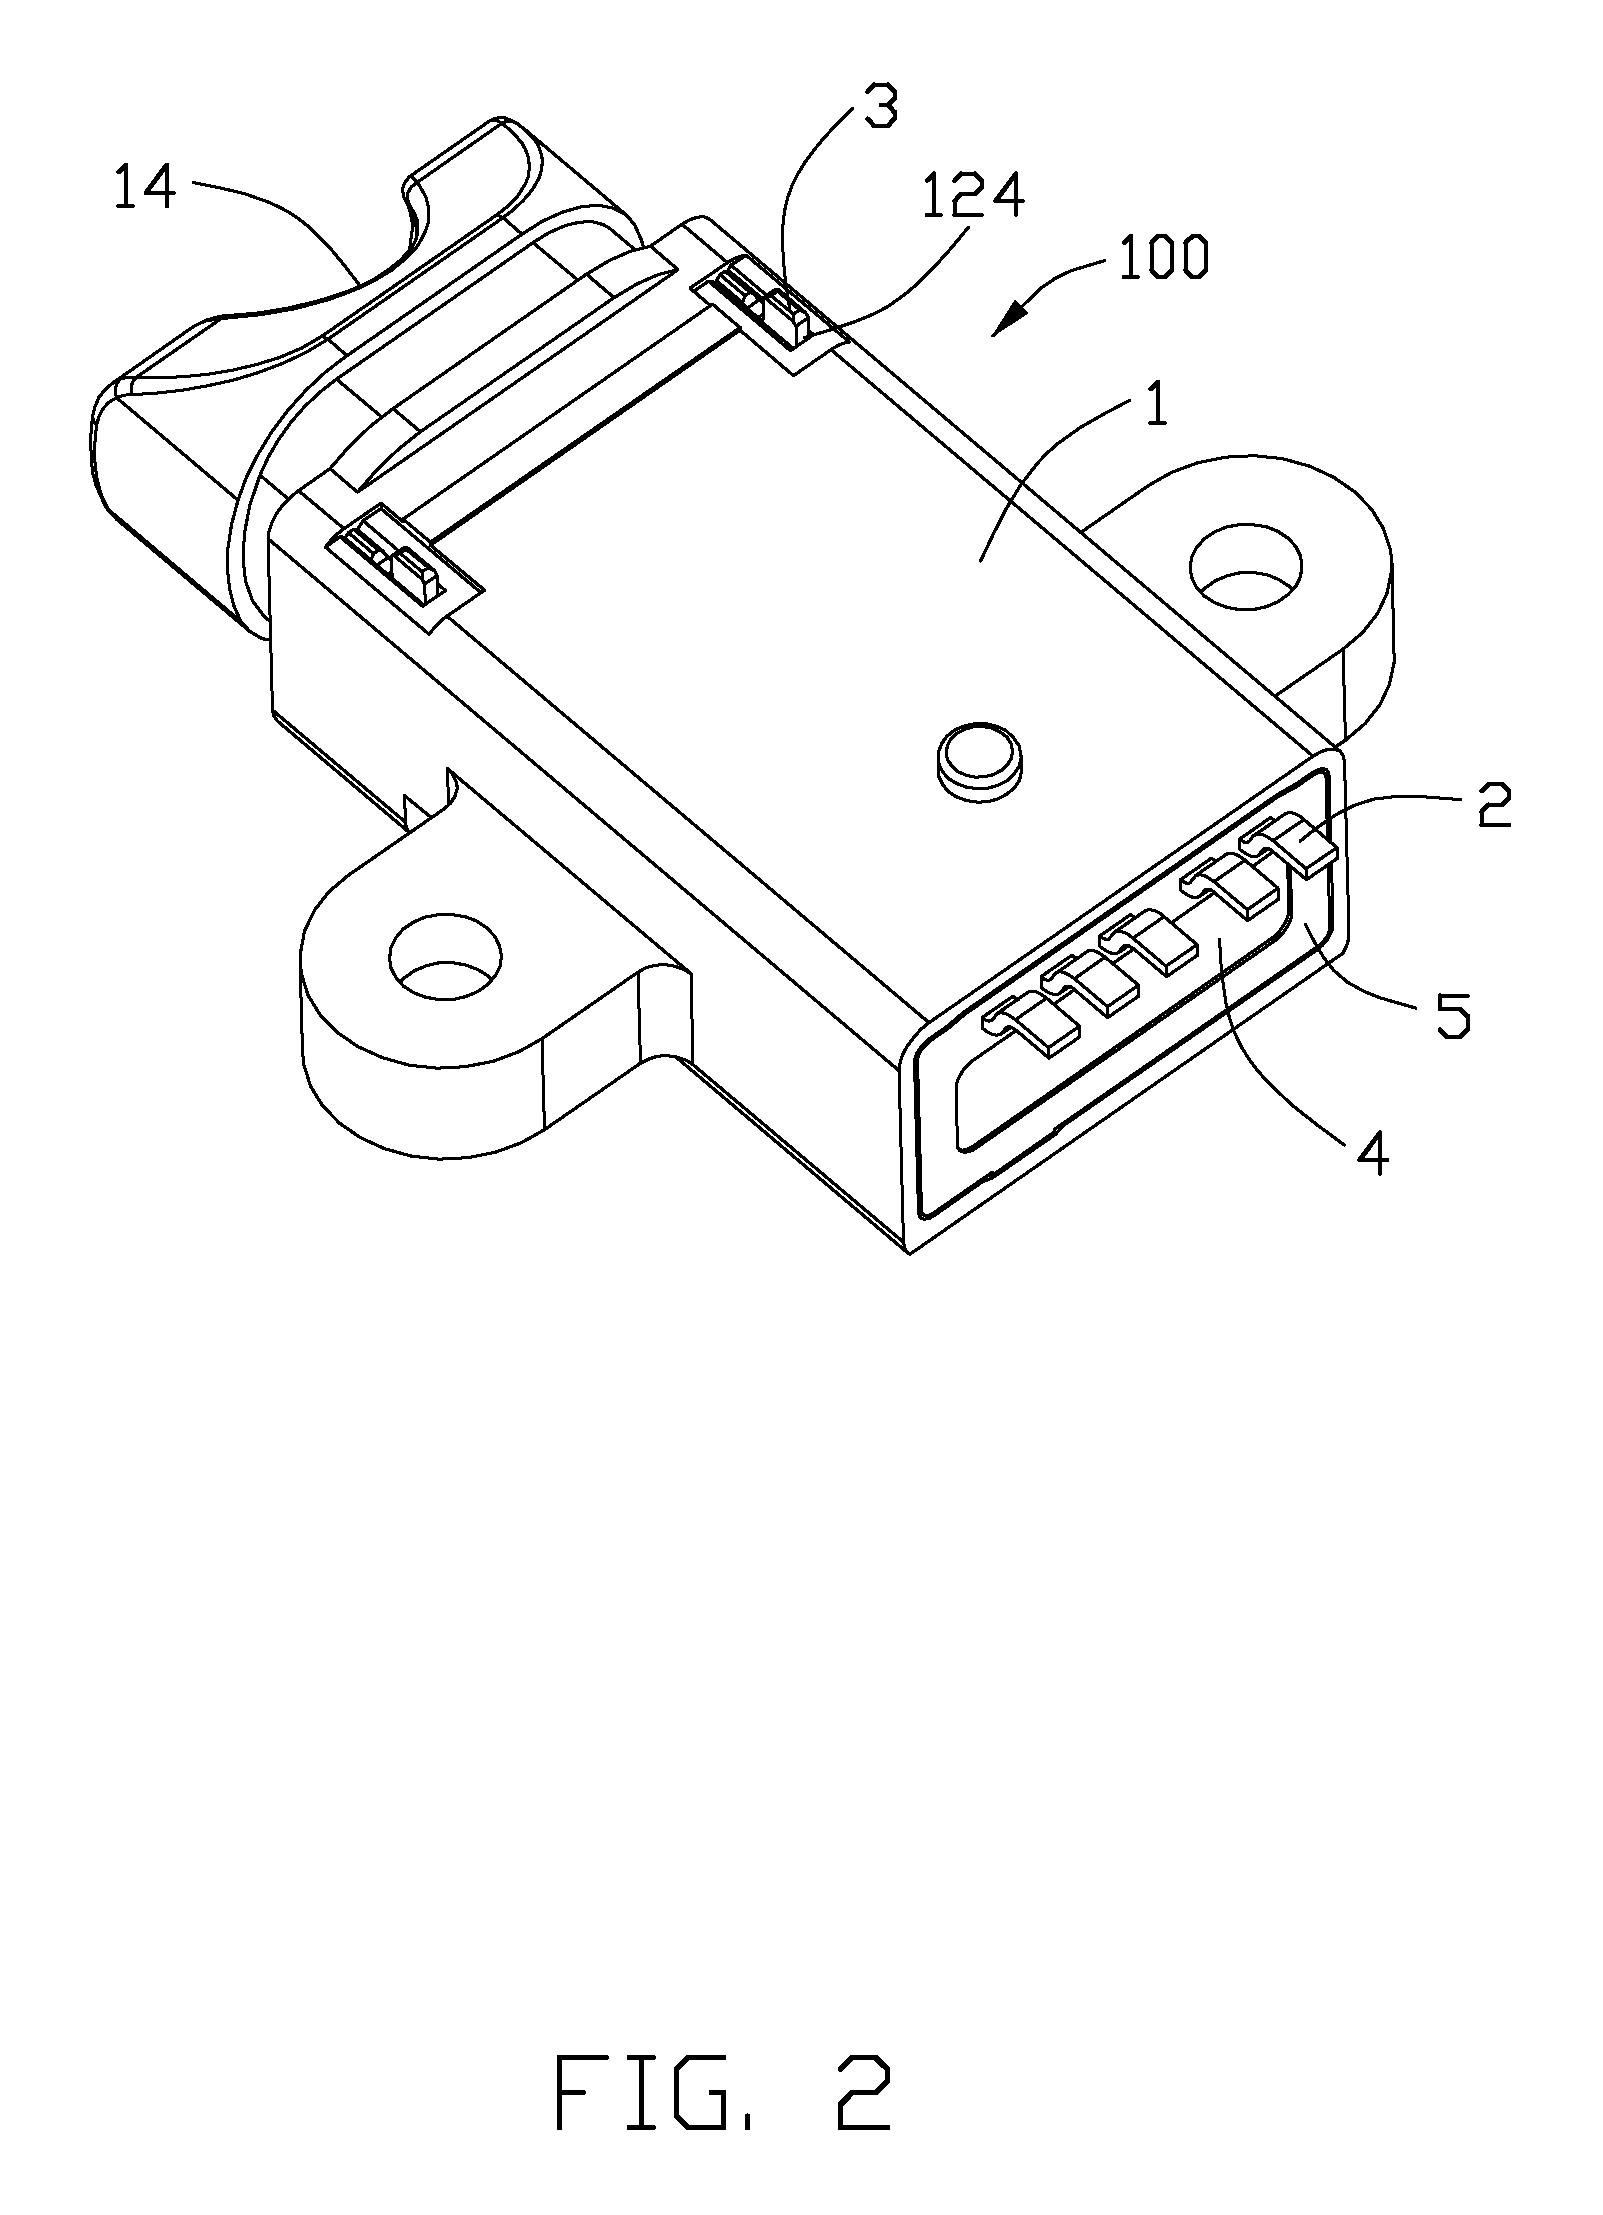 Waterproof audio jack connector